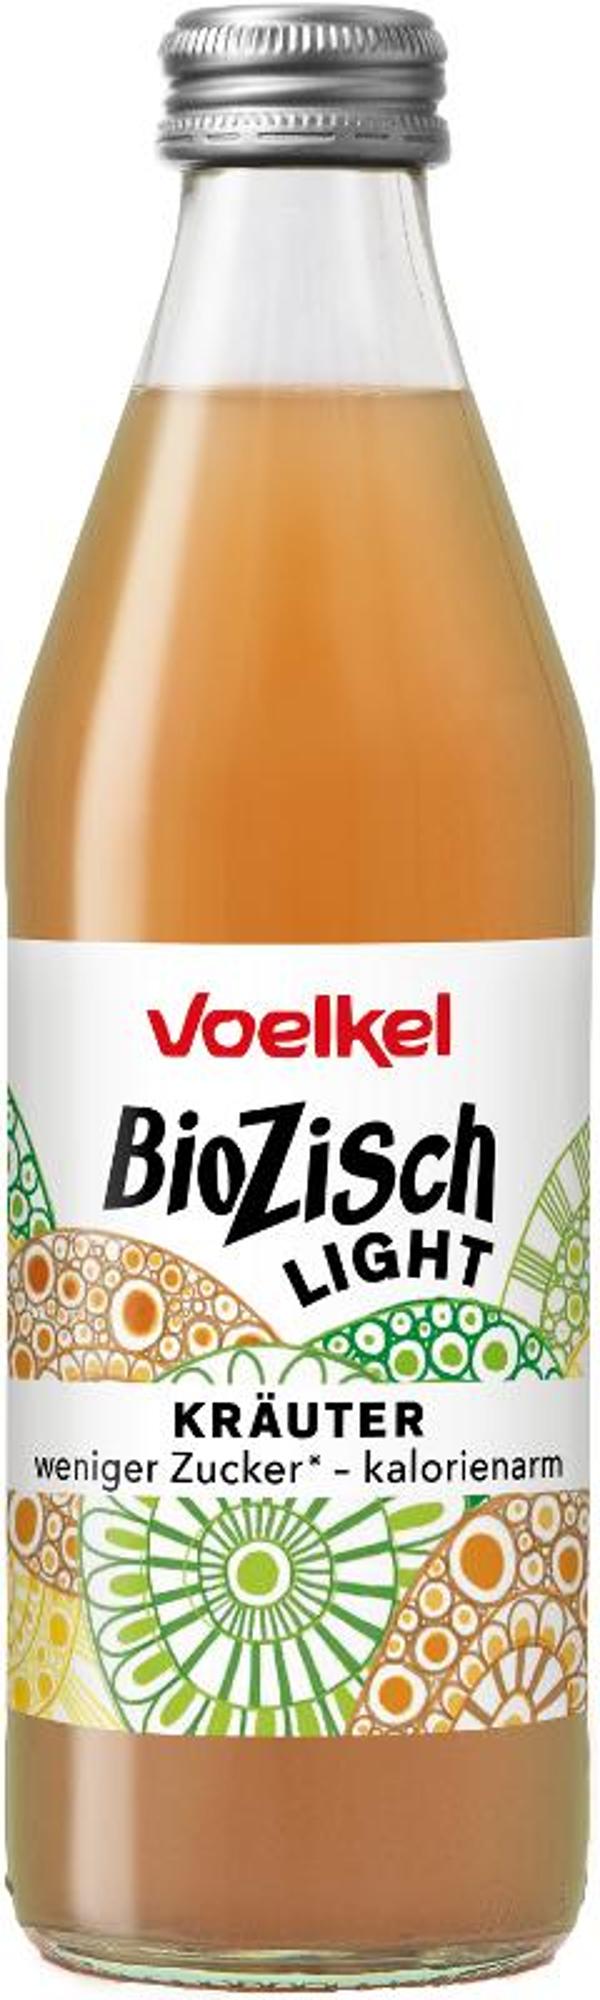 Produktfoto zu BioZisch light Kräuter 0,33l